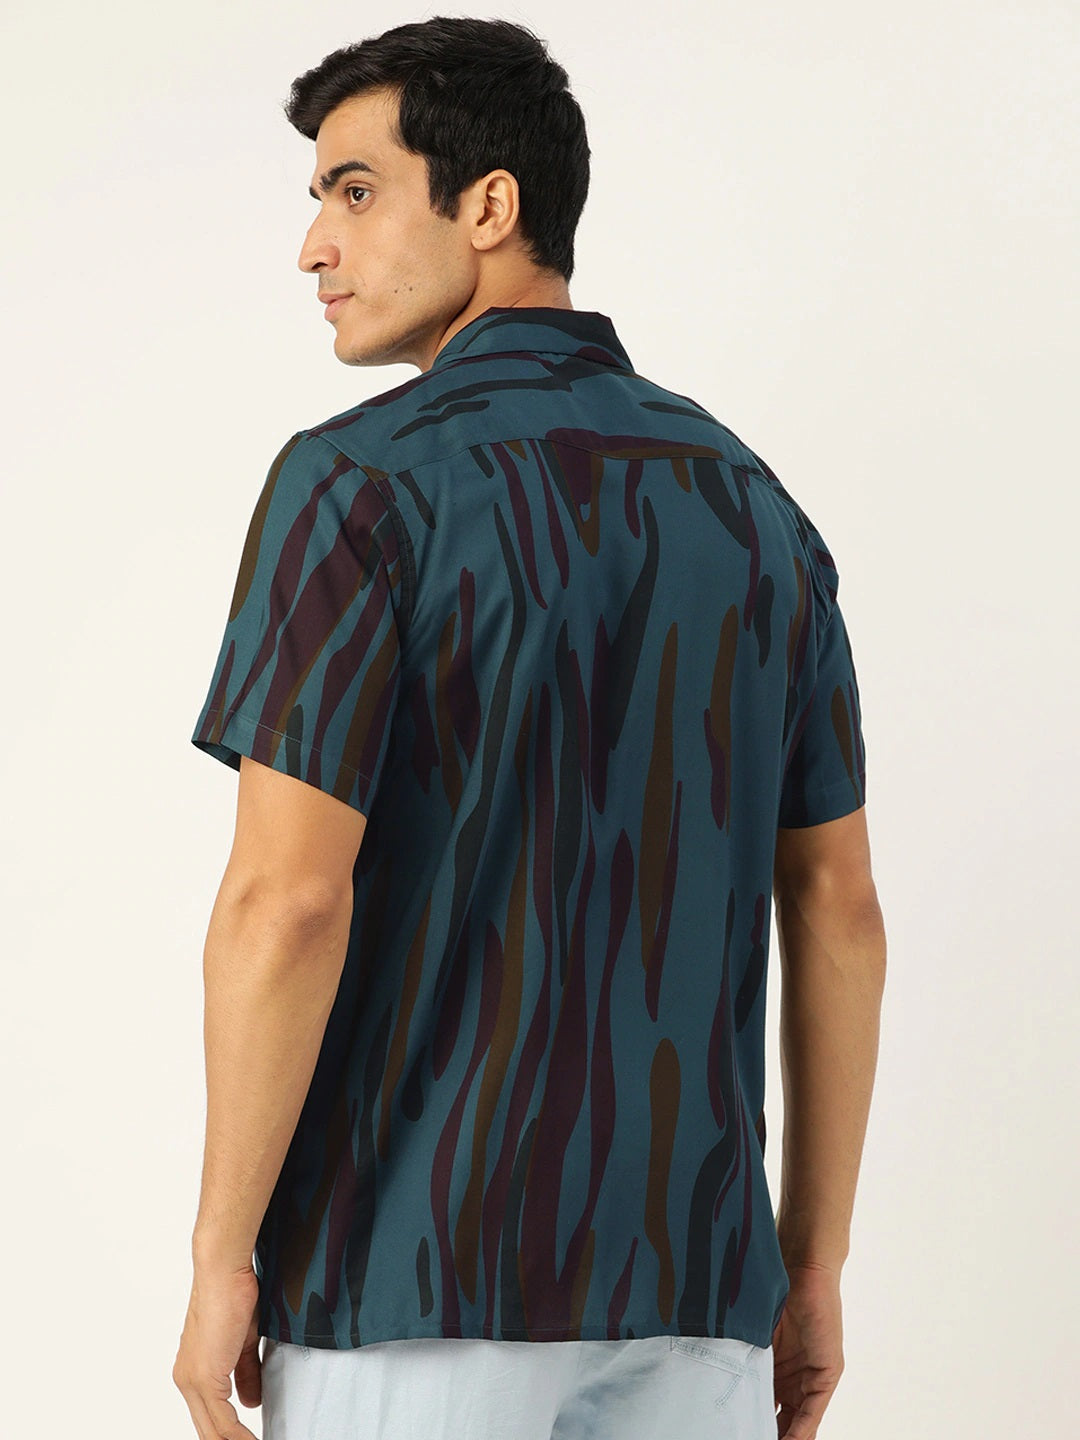 Men Tblue & Black Prints Viscose Rayon Relaxed Fit Casual Resort Shirt